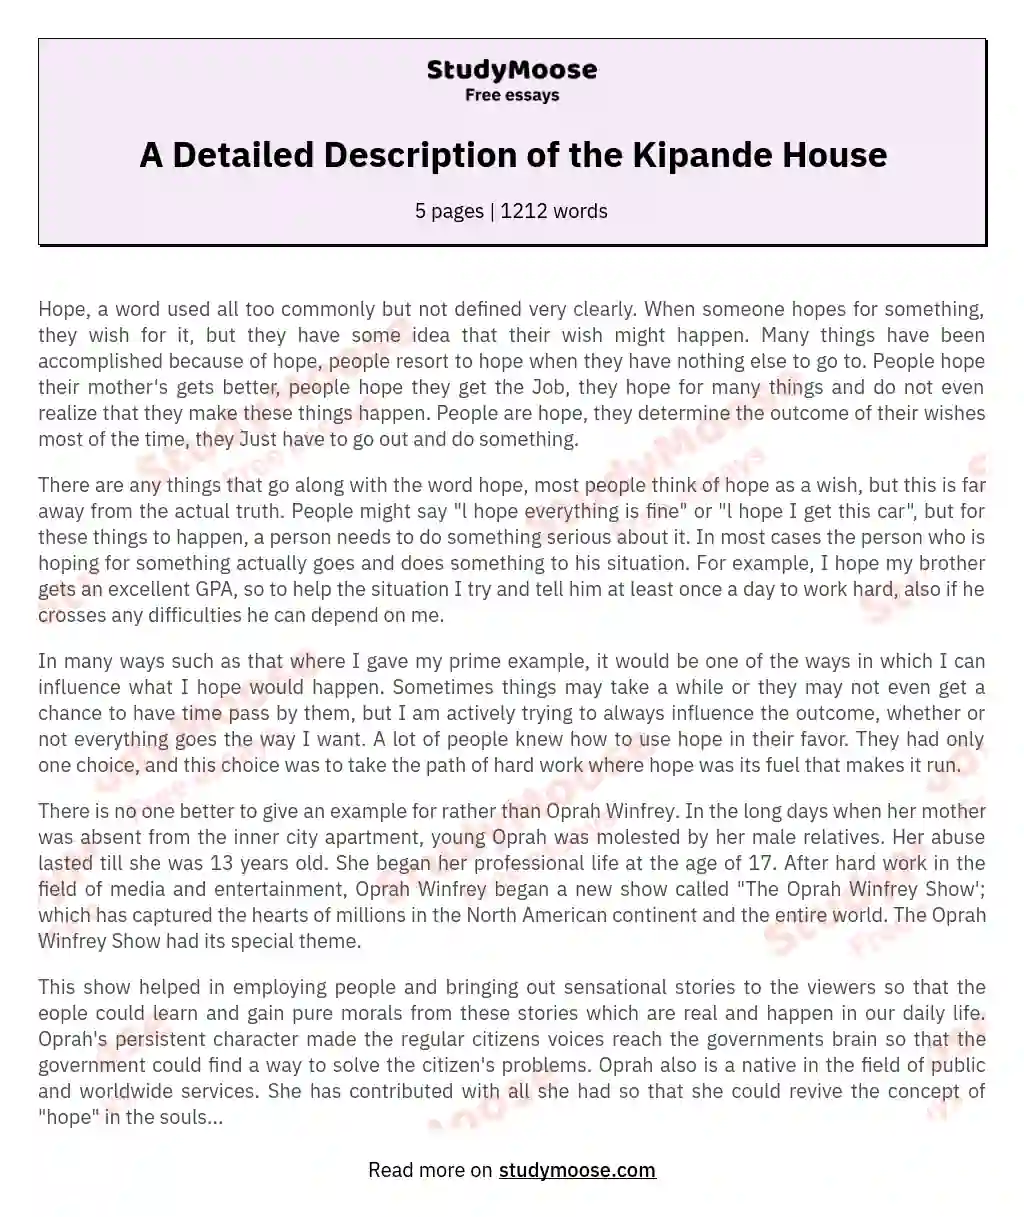 A Detailed Description of the Kipande House essay